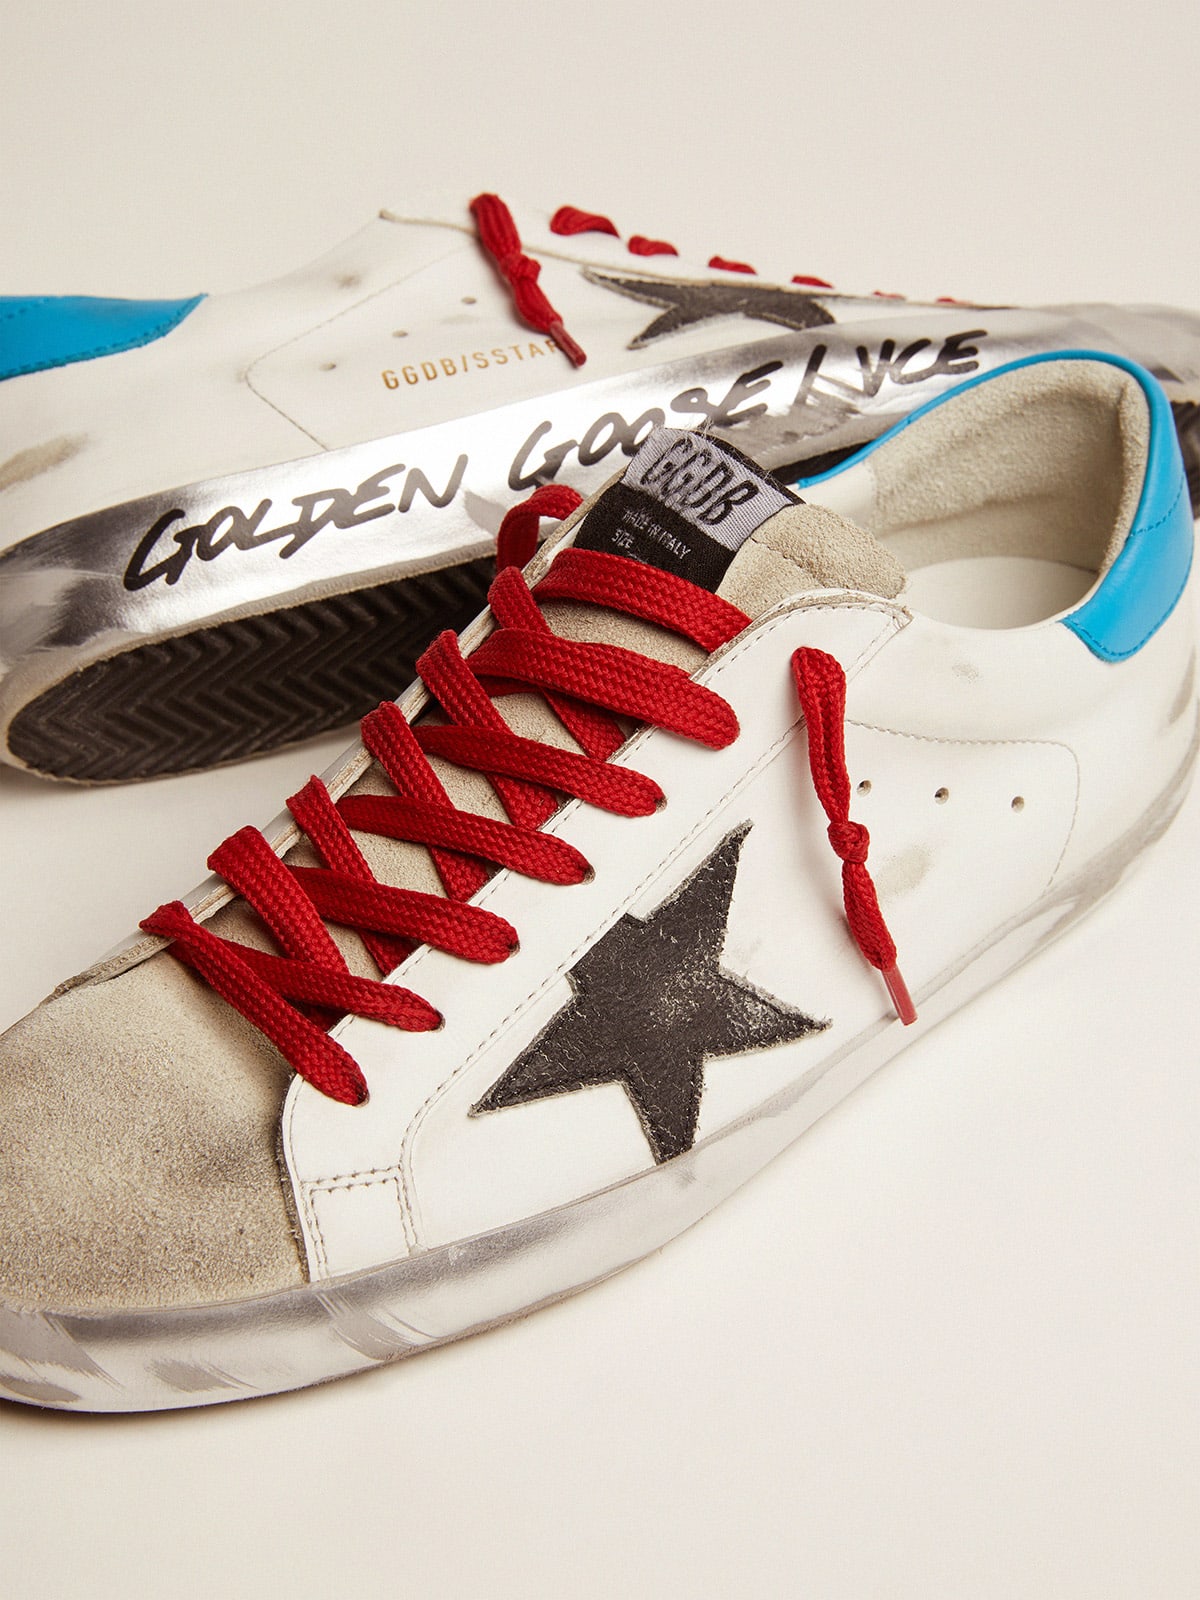 Super-Star LTD sneakers with light blue heel tab and black star